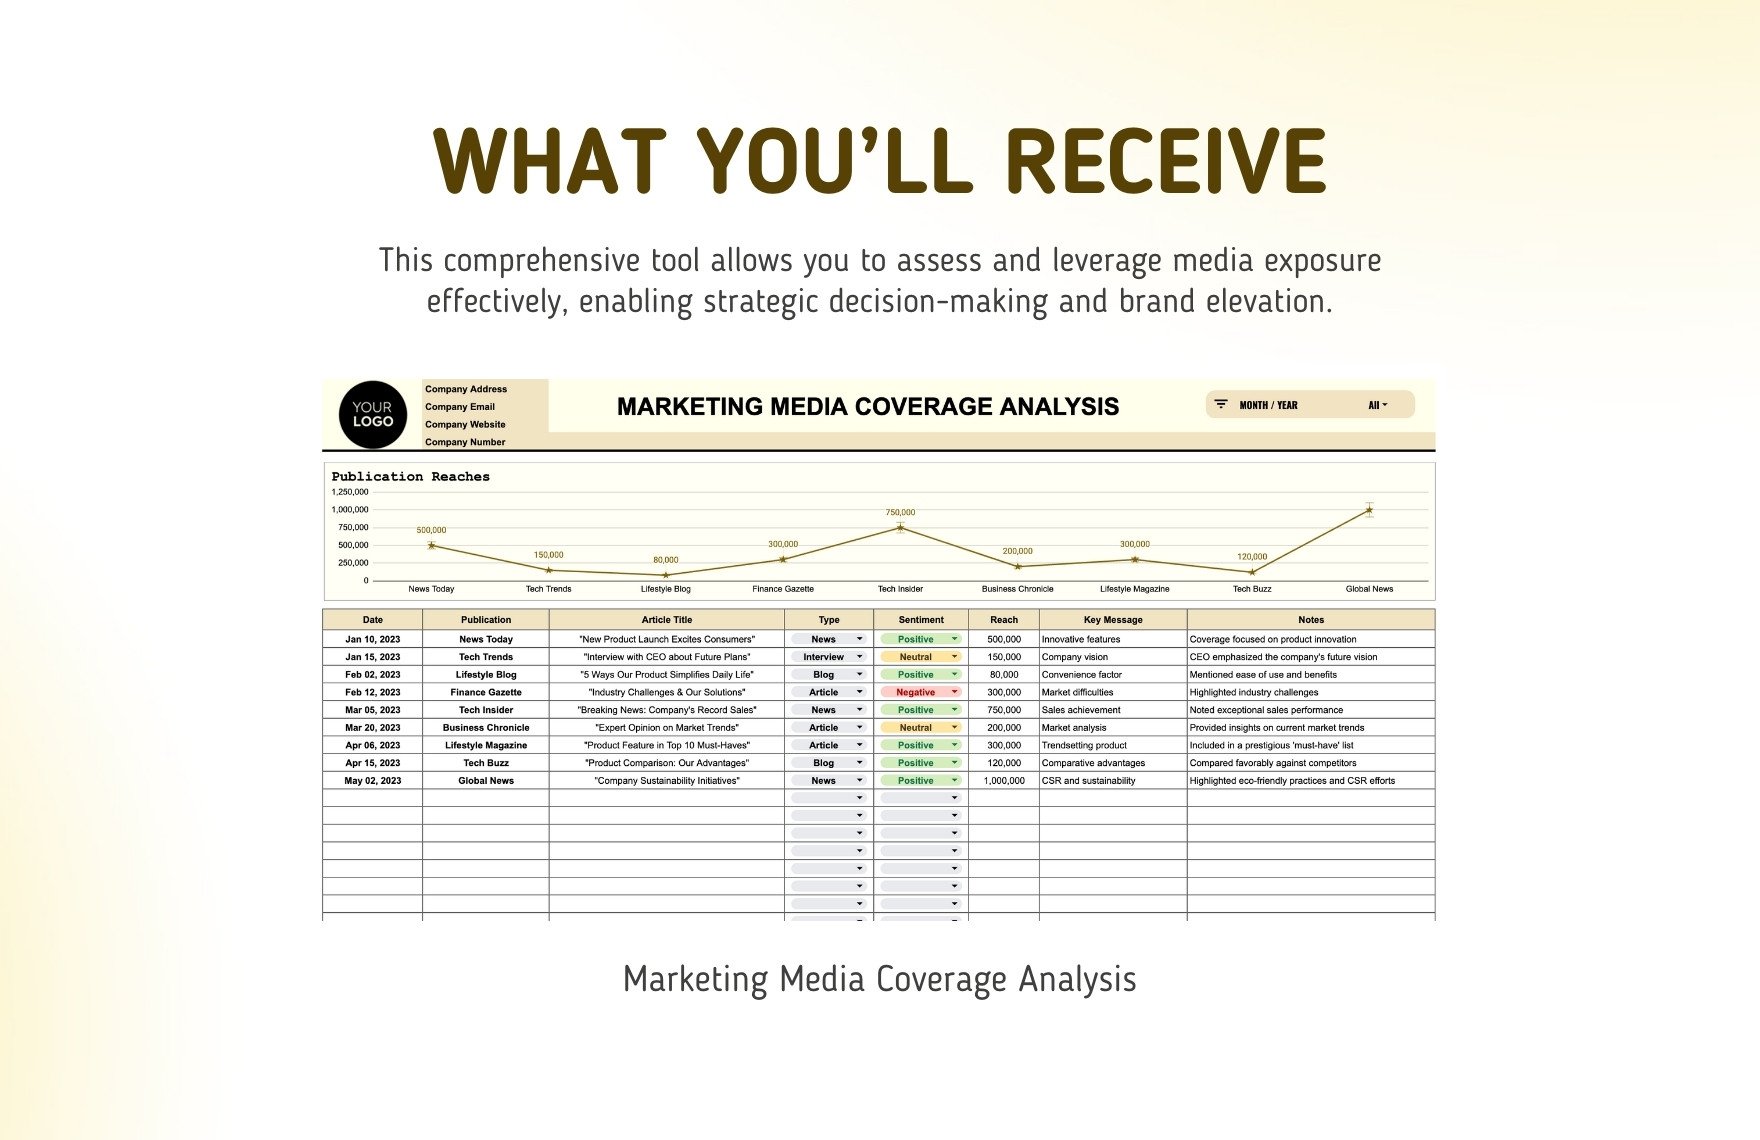 Marketing Media Coverage Analysis Template